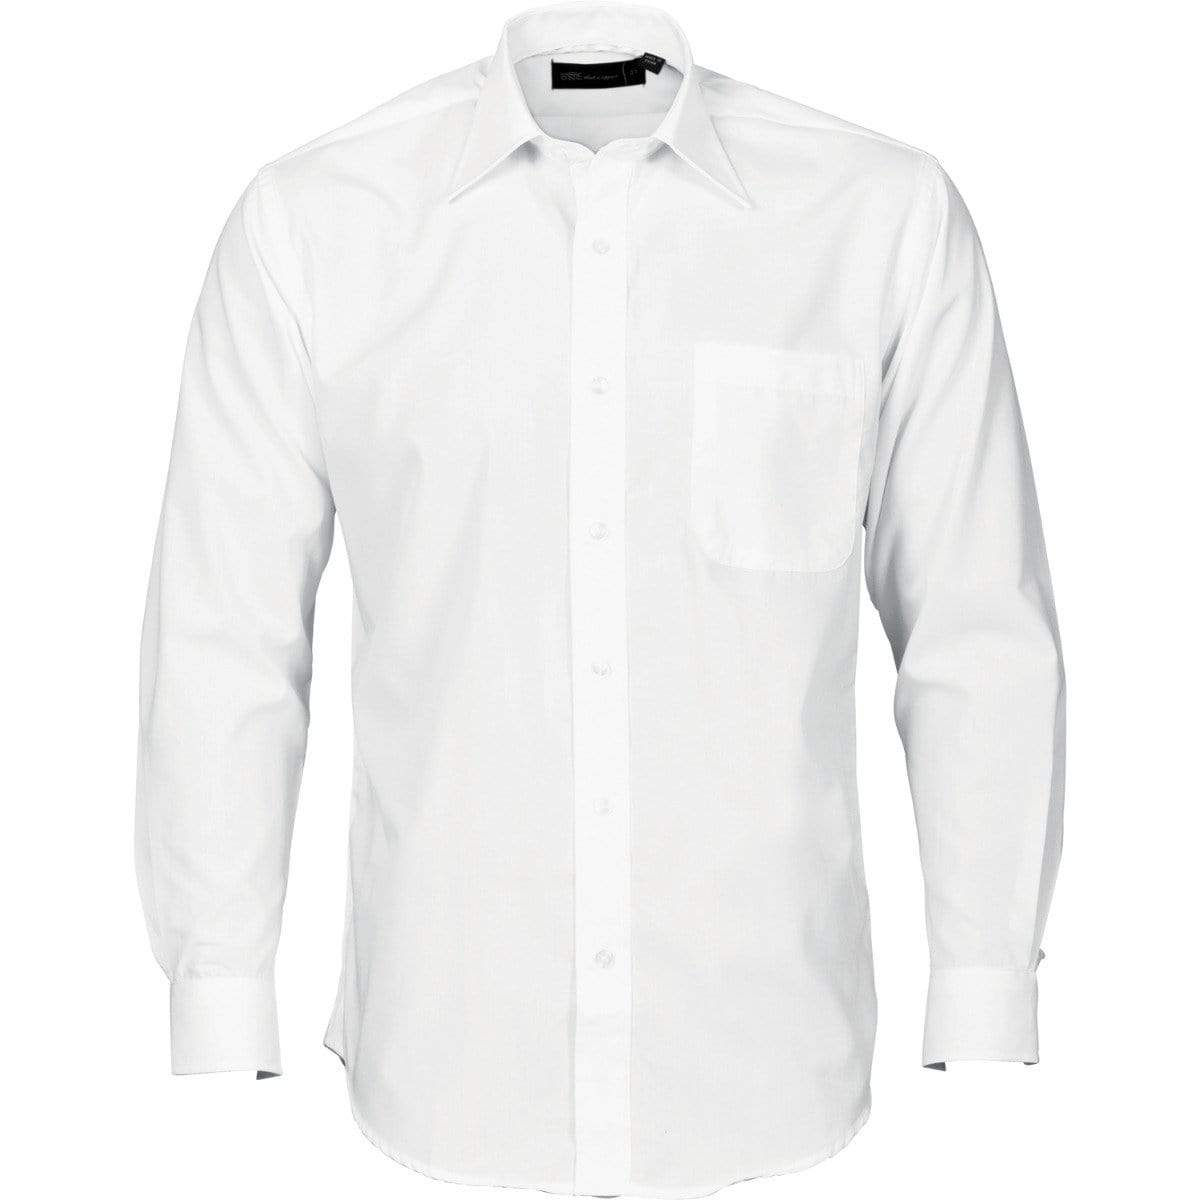 DNC Workwear Corporate Wear White / 5XL DNC WORKWEAR Polyester Cotton Long Sleeve Business Shirt 4132